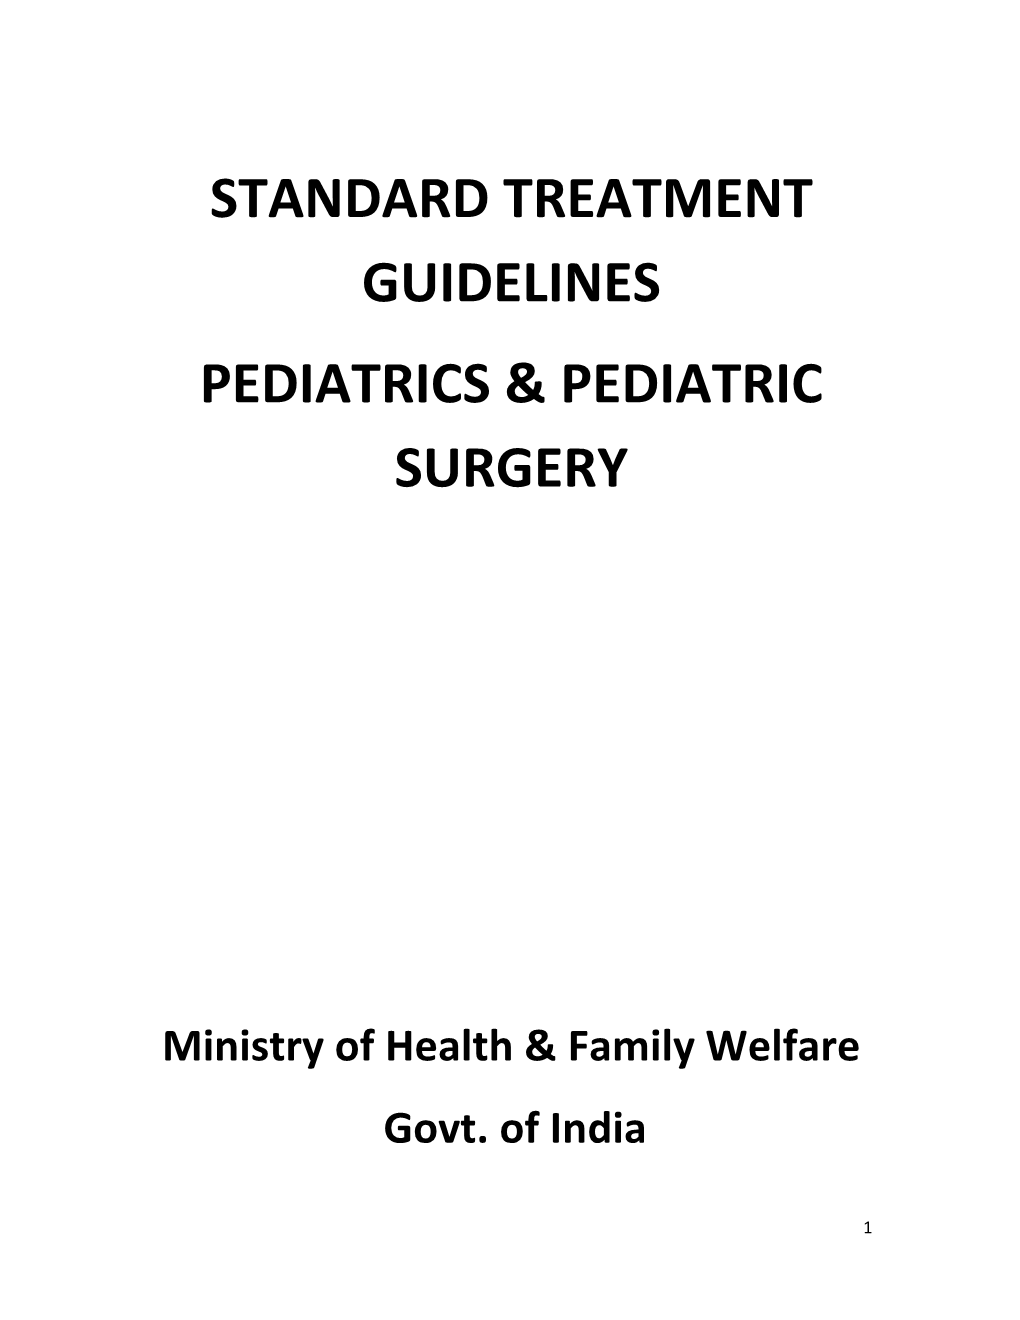 Standard Treatment Guidelines Pediatrics & Pediatric Surgery